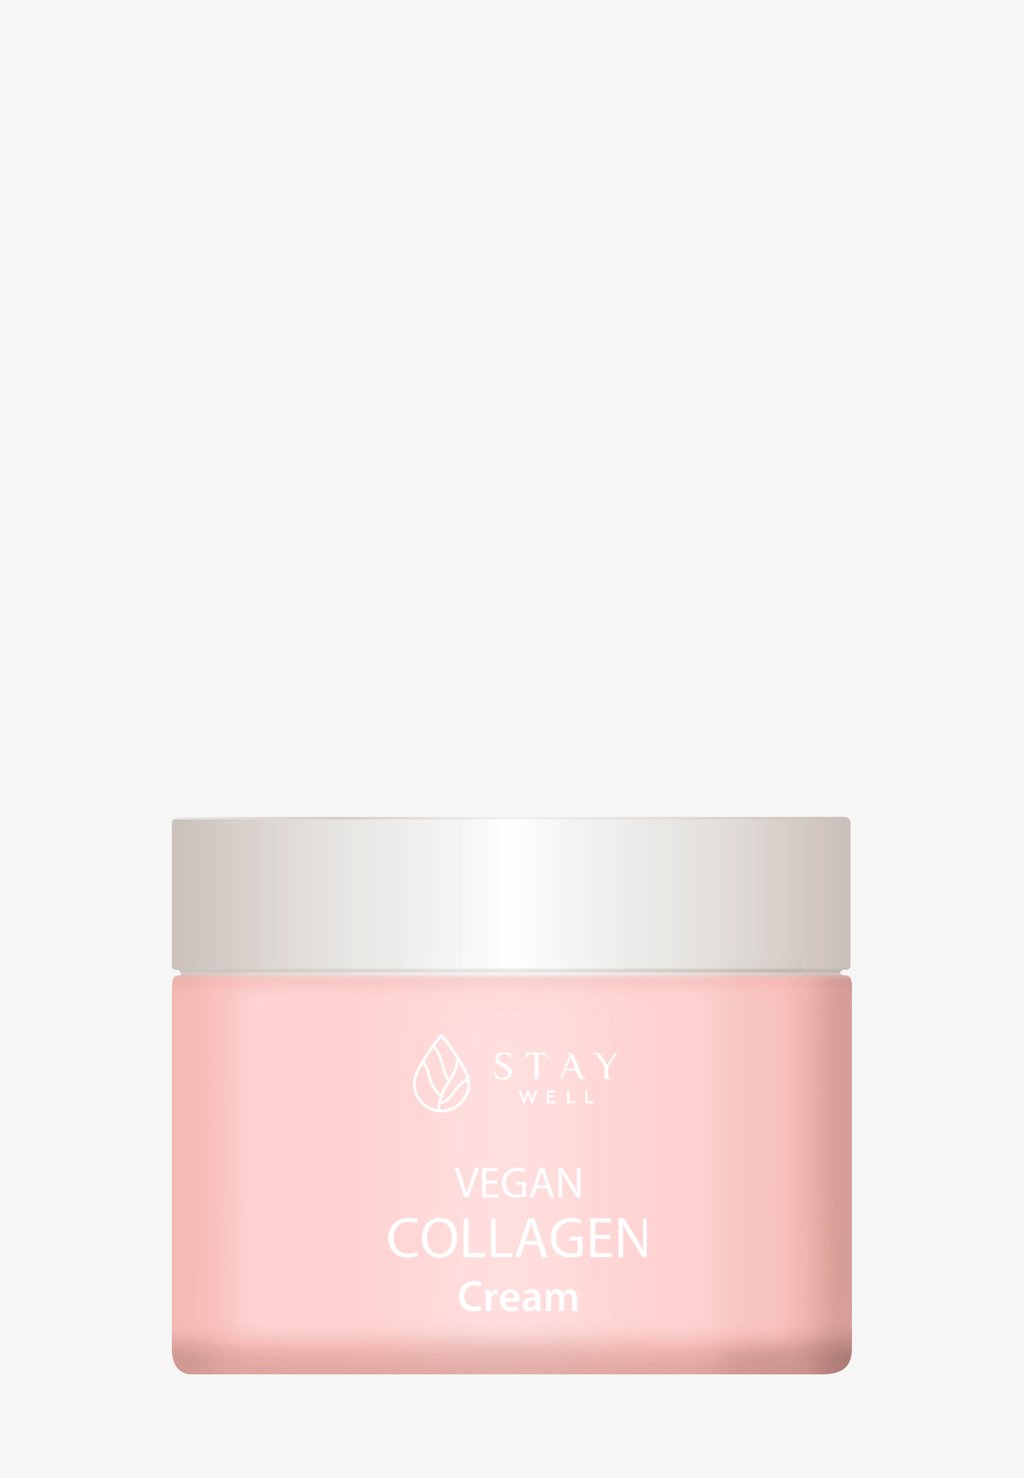 Дневной крем Stay Well Vegan Collagen Cream STAY Well